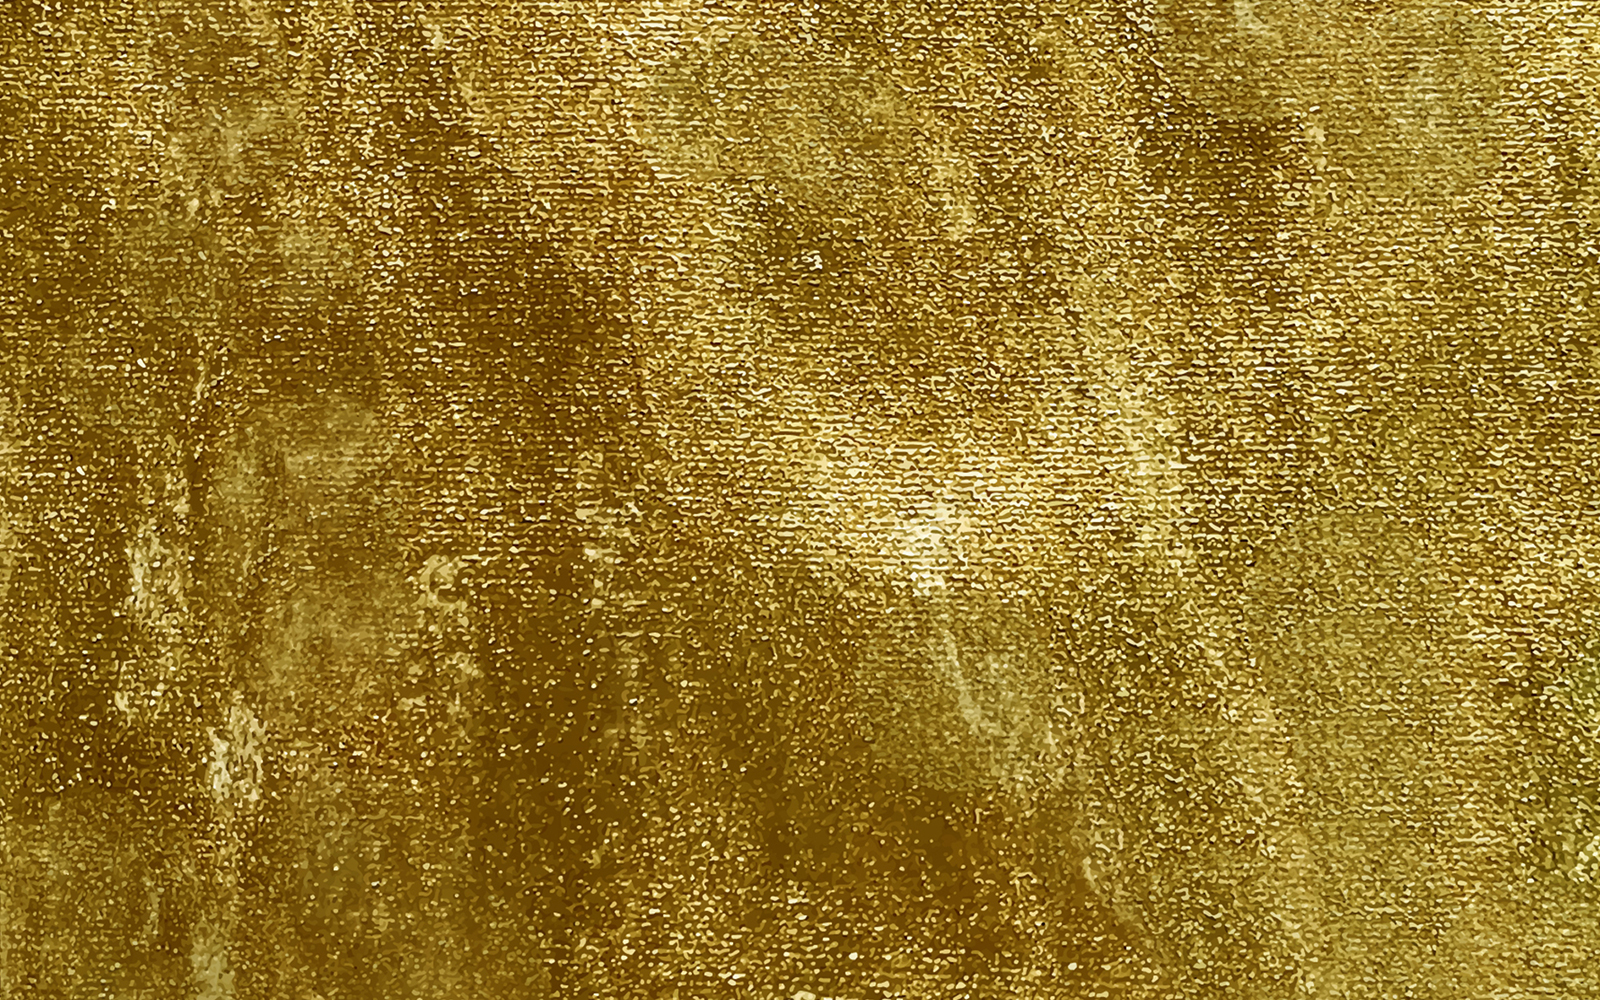 Golden shiny grunge texture background